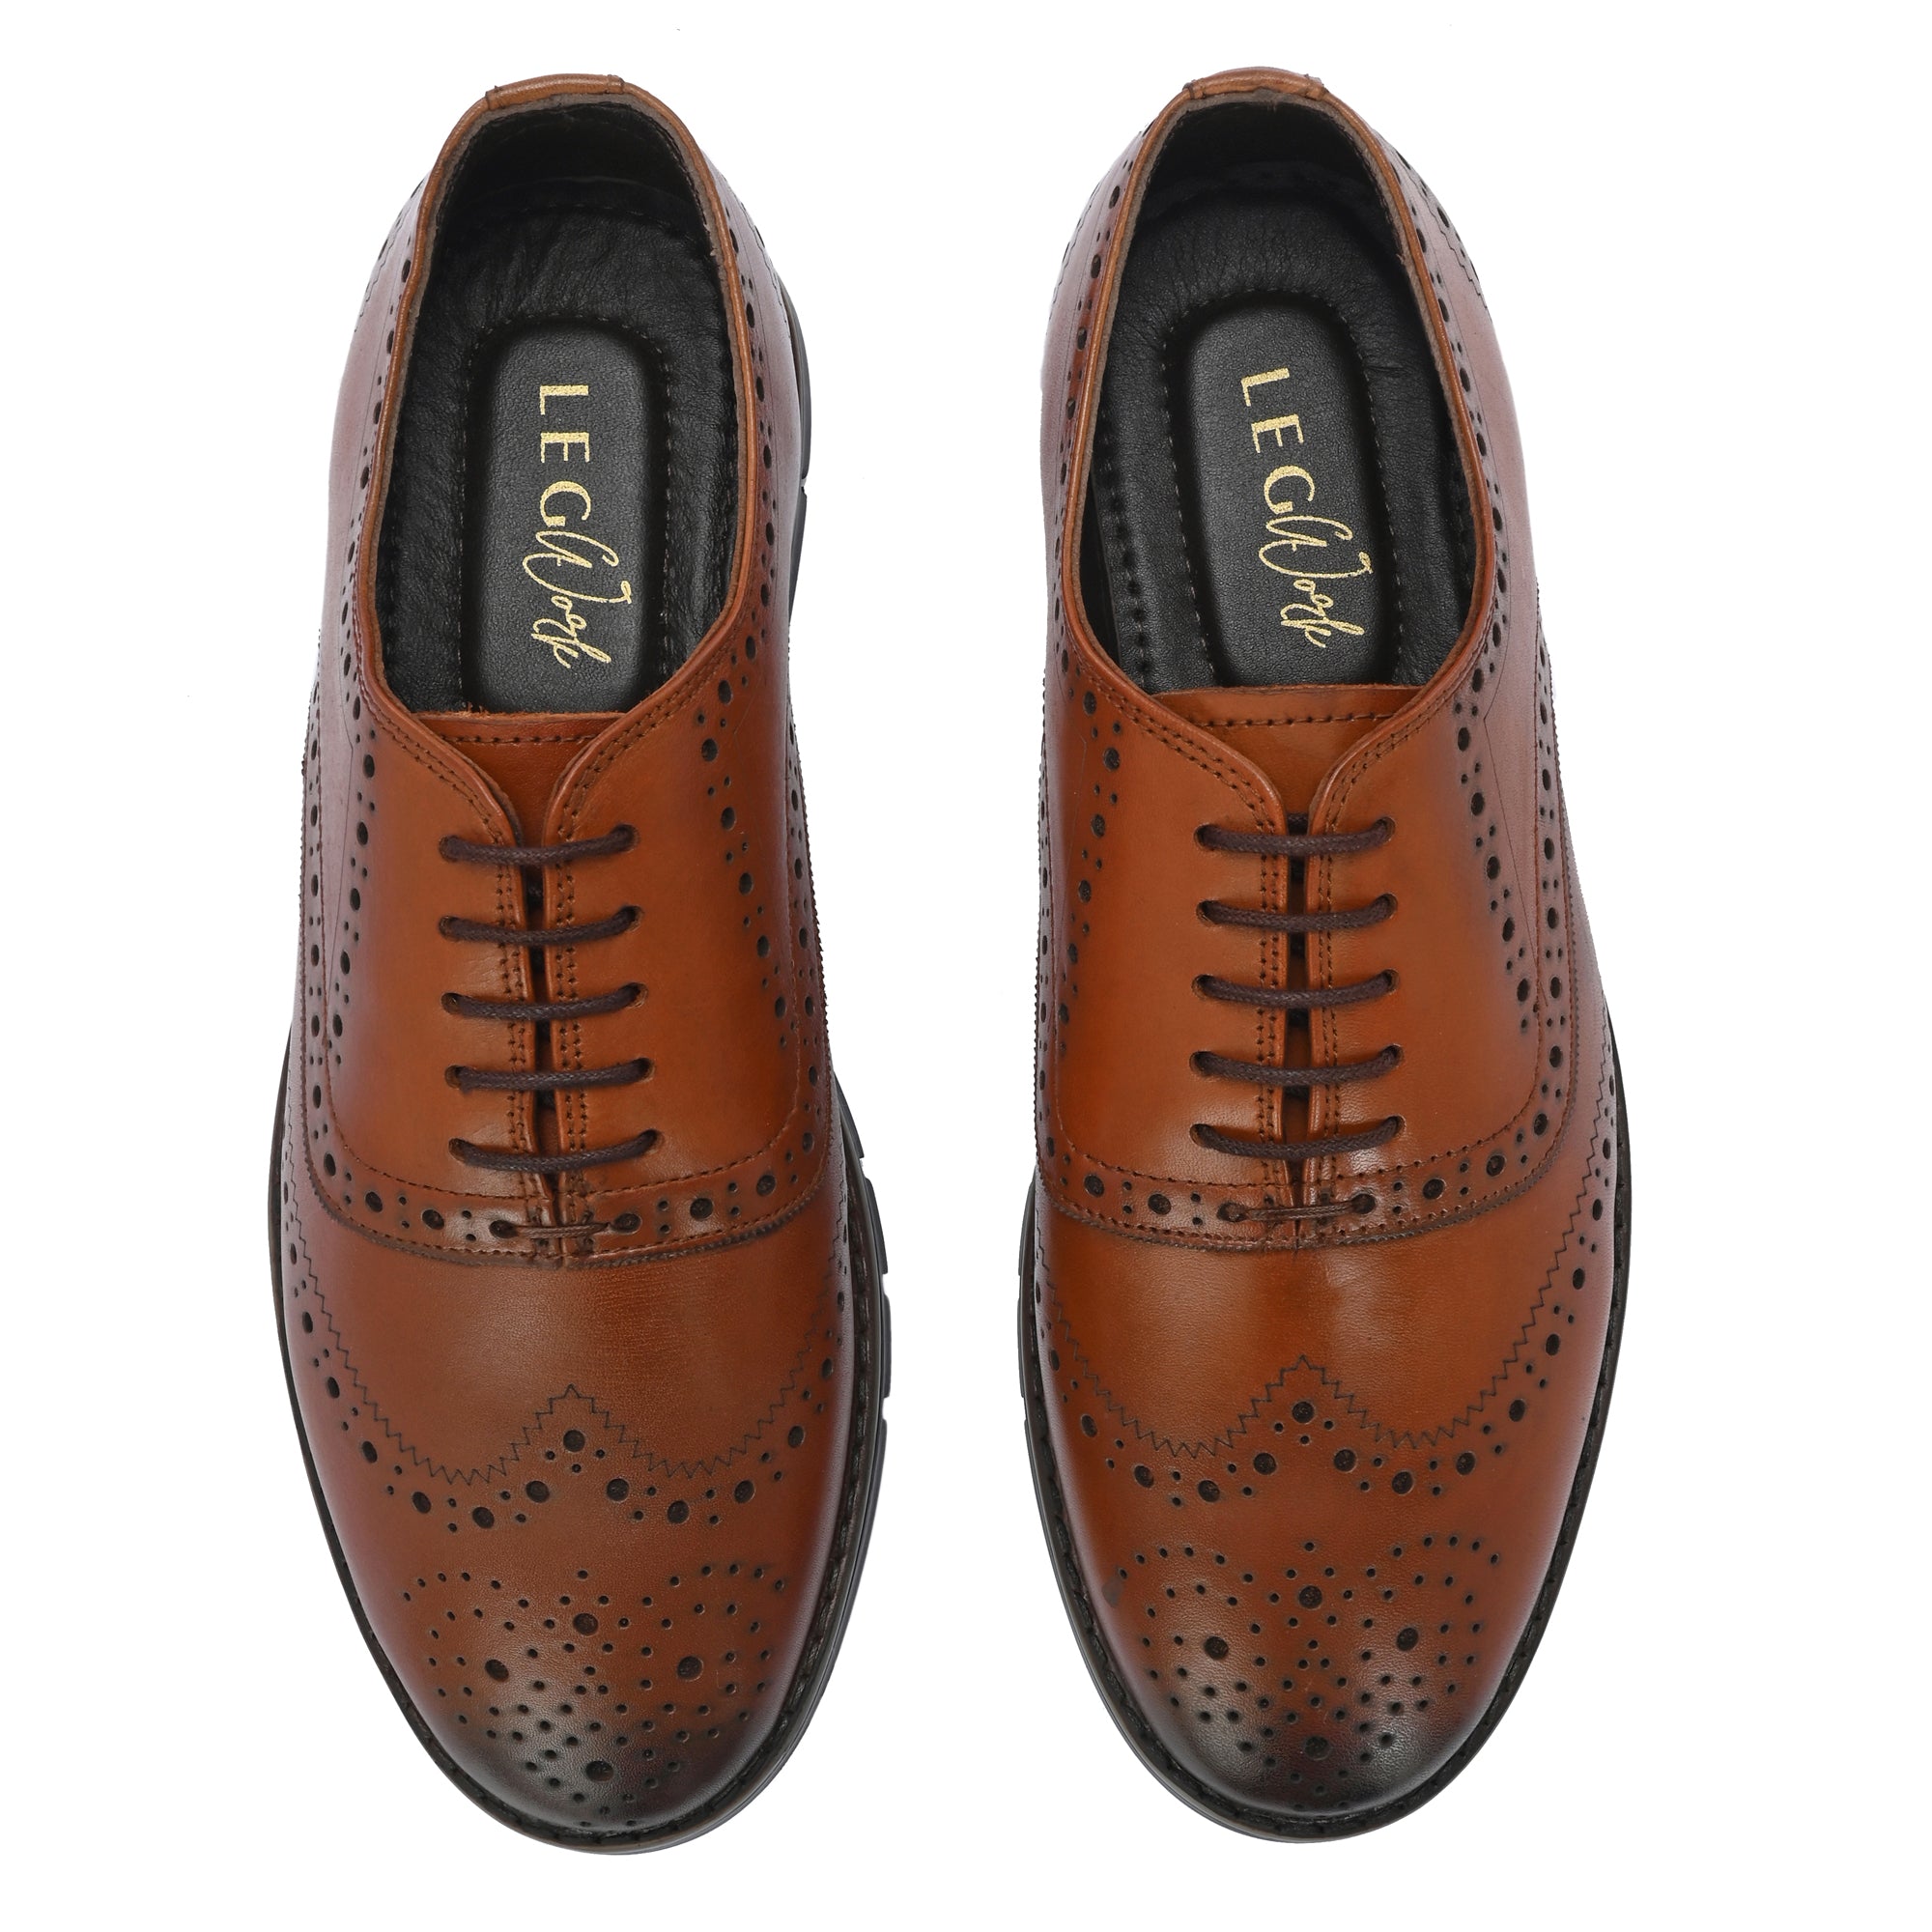 Legwork Informal Brogue Original Tan Italian Leather Shoes